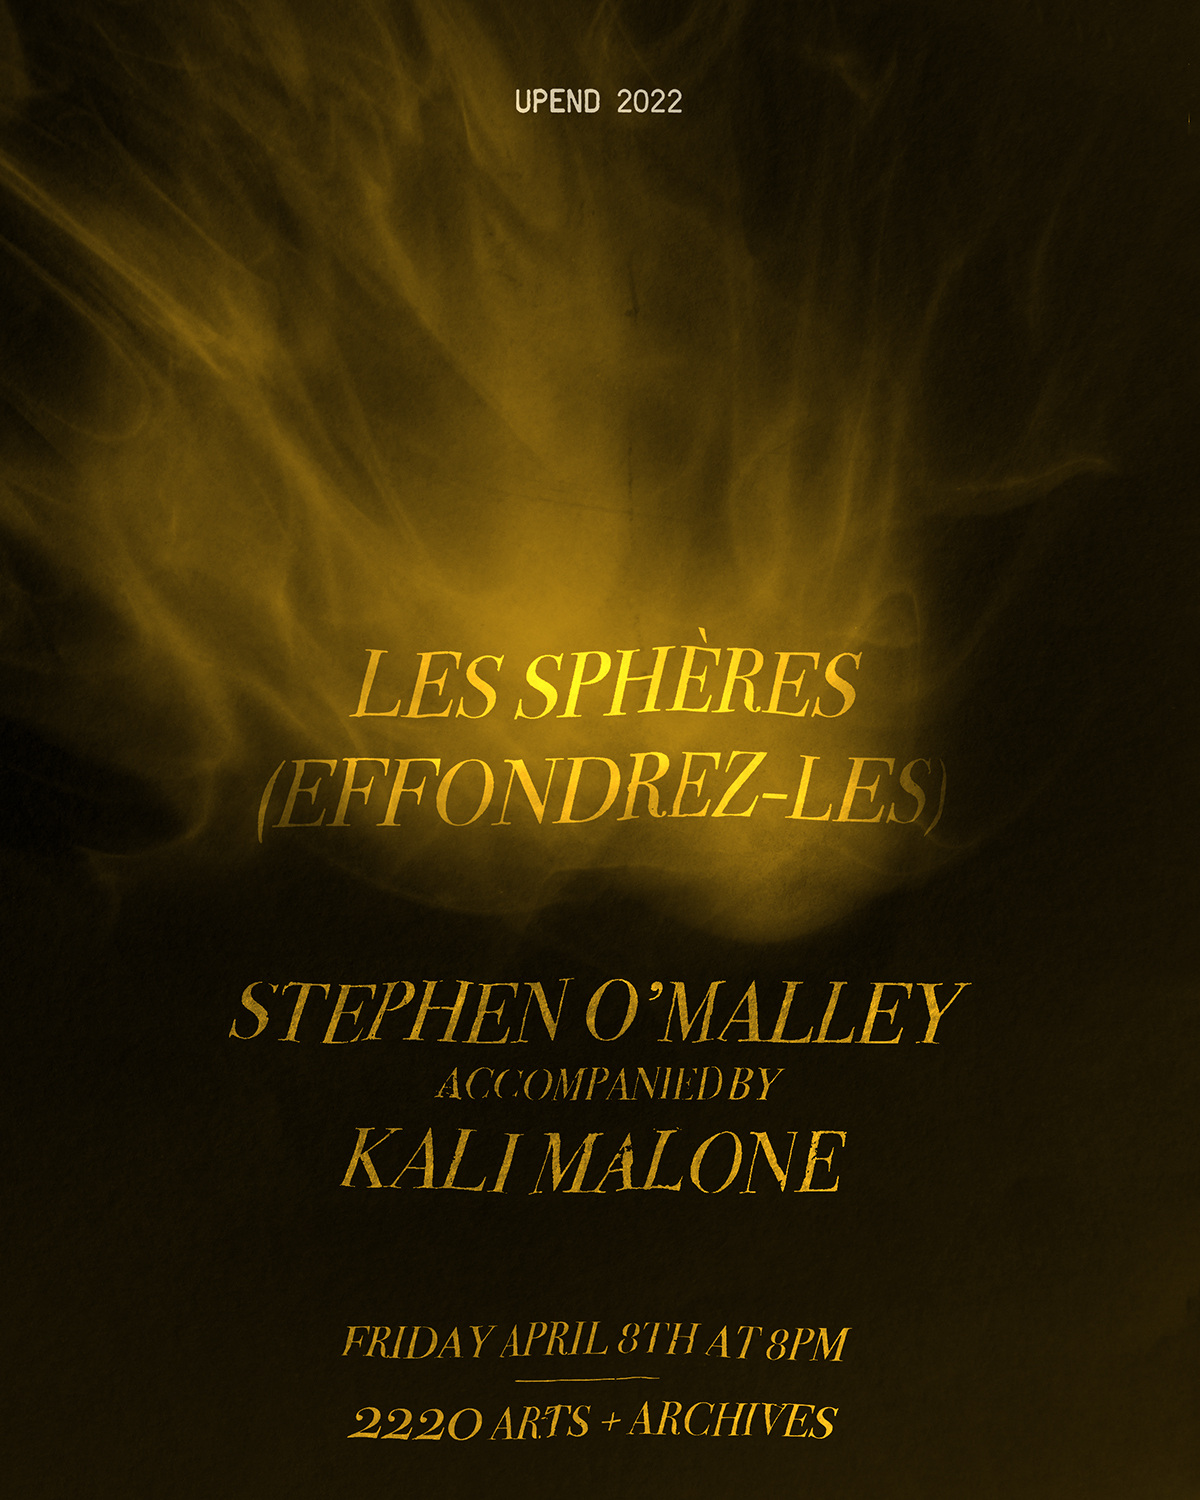 Stephen O’Malley “Les Sphères (effondrez-les)” (accompanied by Kali Malone) @ 2220 ARTS + ARCHIVES